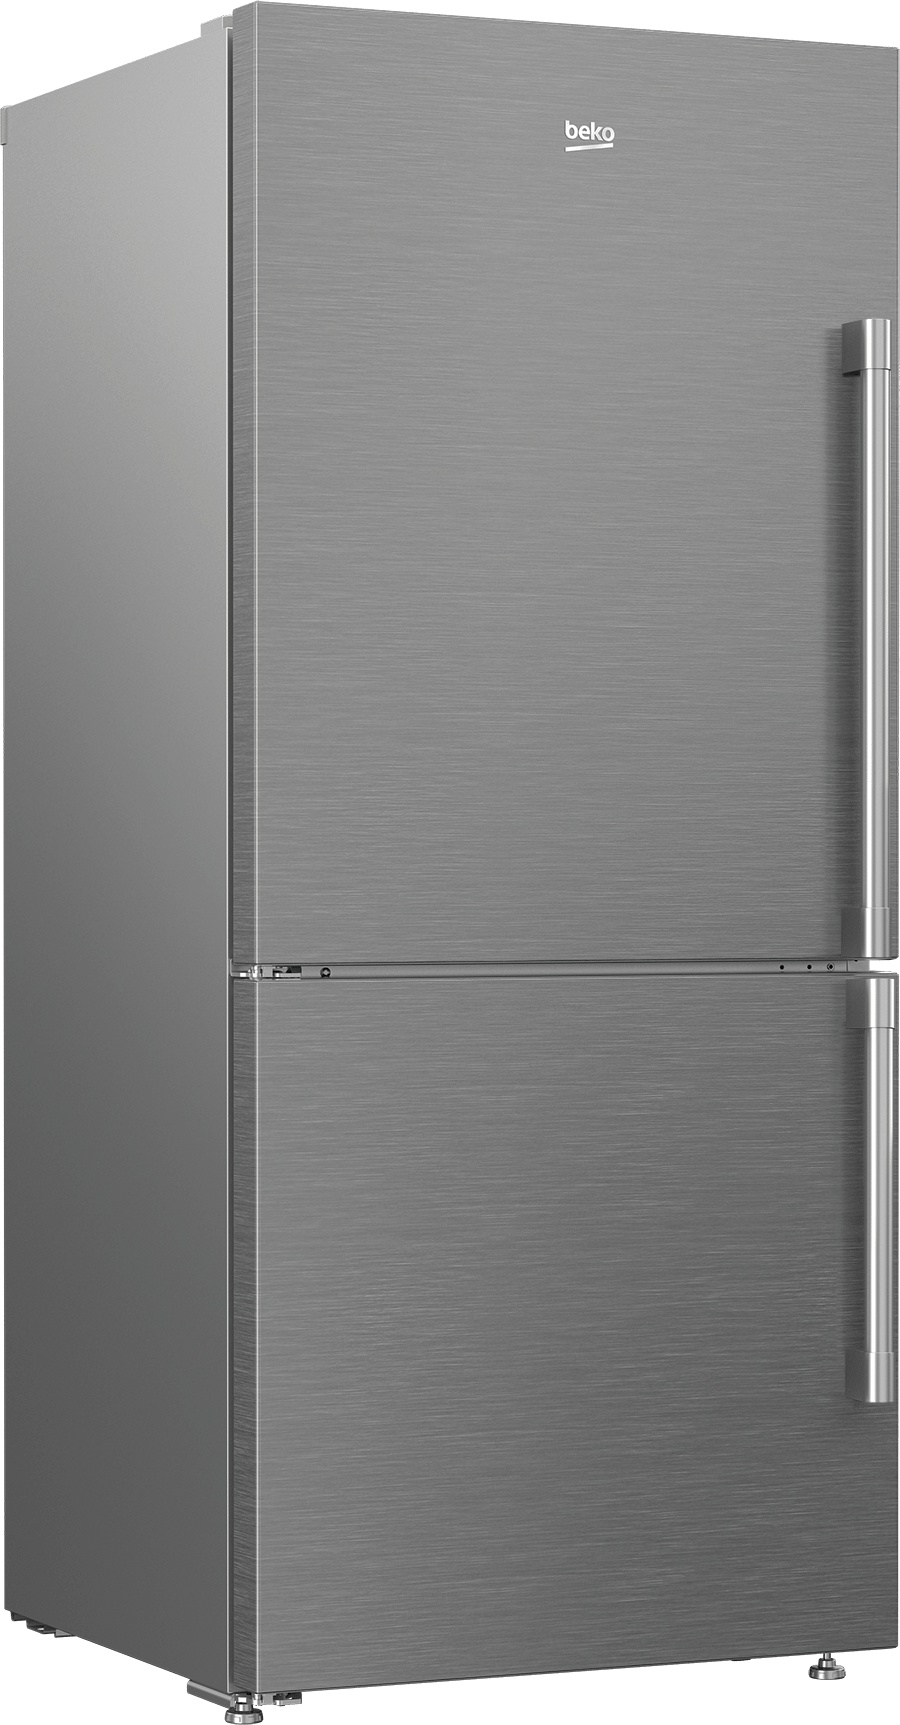 30" Freezer Bottom Stainless Steel Refrigerator with Auto Ice Maker (Left Hinge)